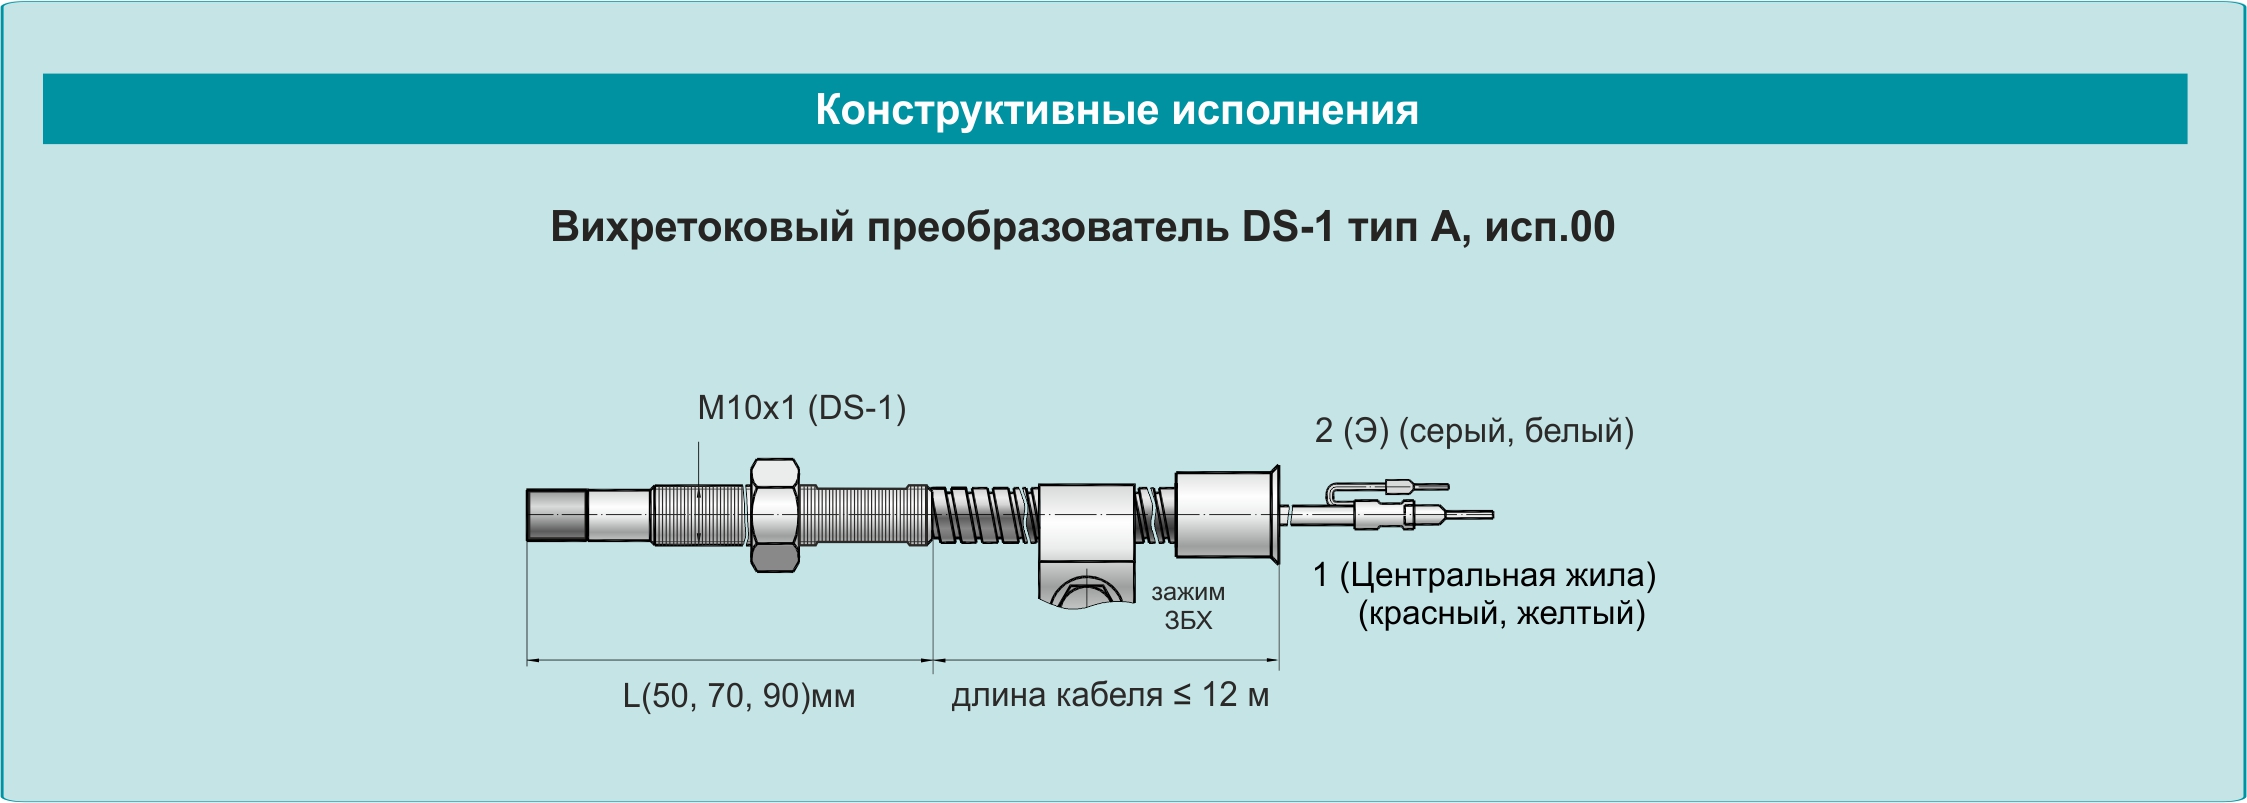 Design of IKV-1-3-1 ver. C (cryogenic) vibration measuring channel